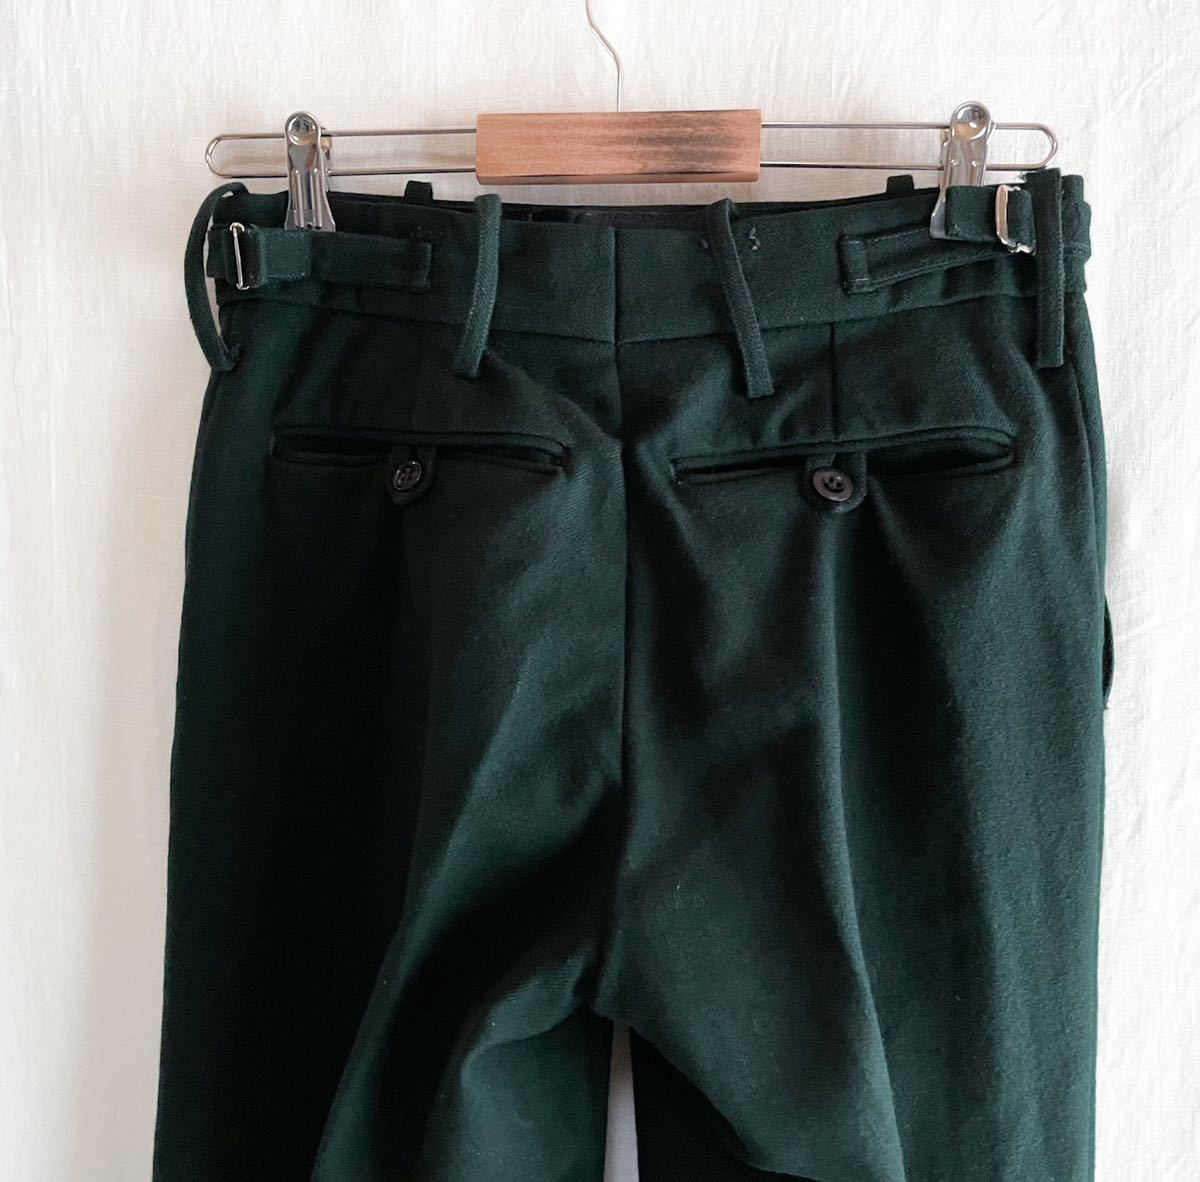  rare England army trousers dress pants dark green W29 euro military France army Germany army slacks 